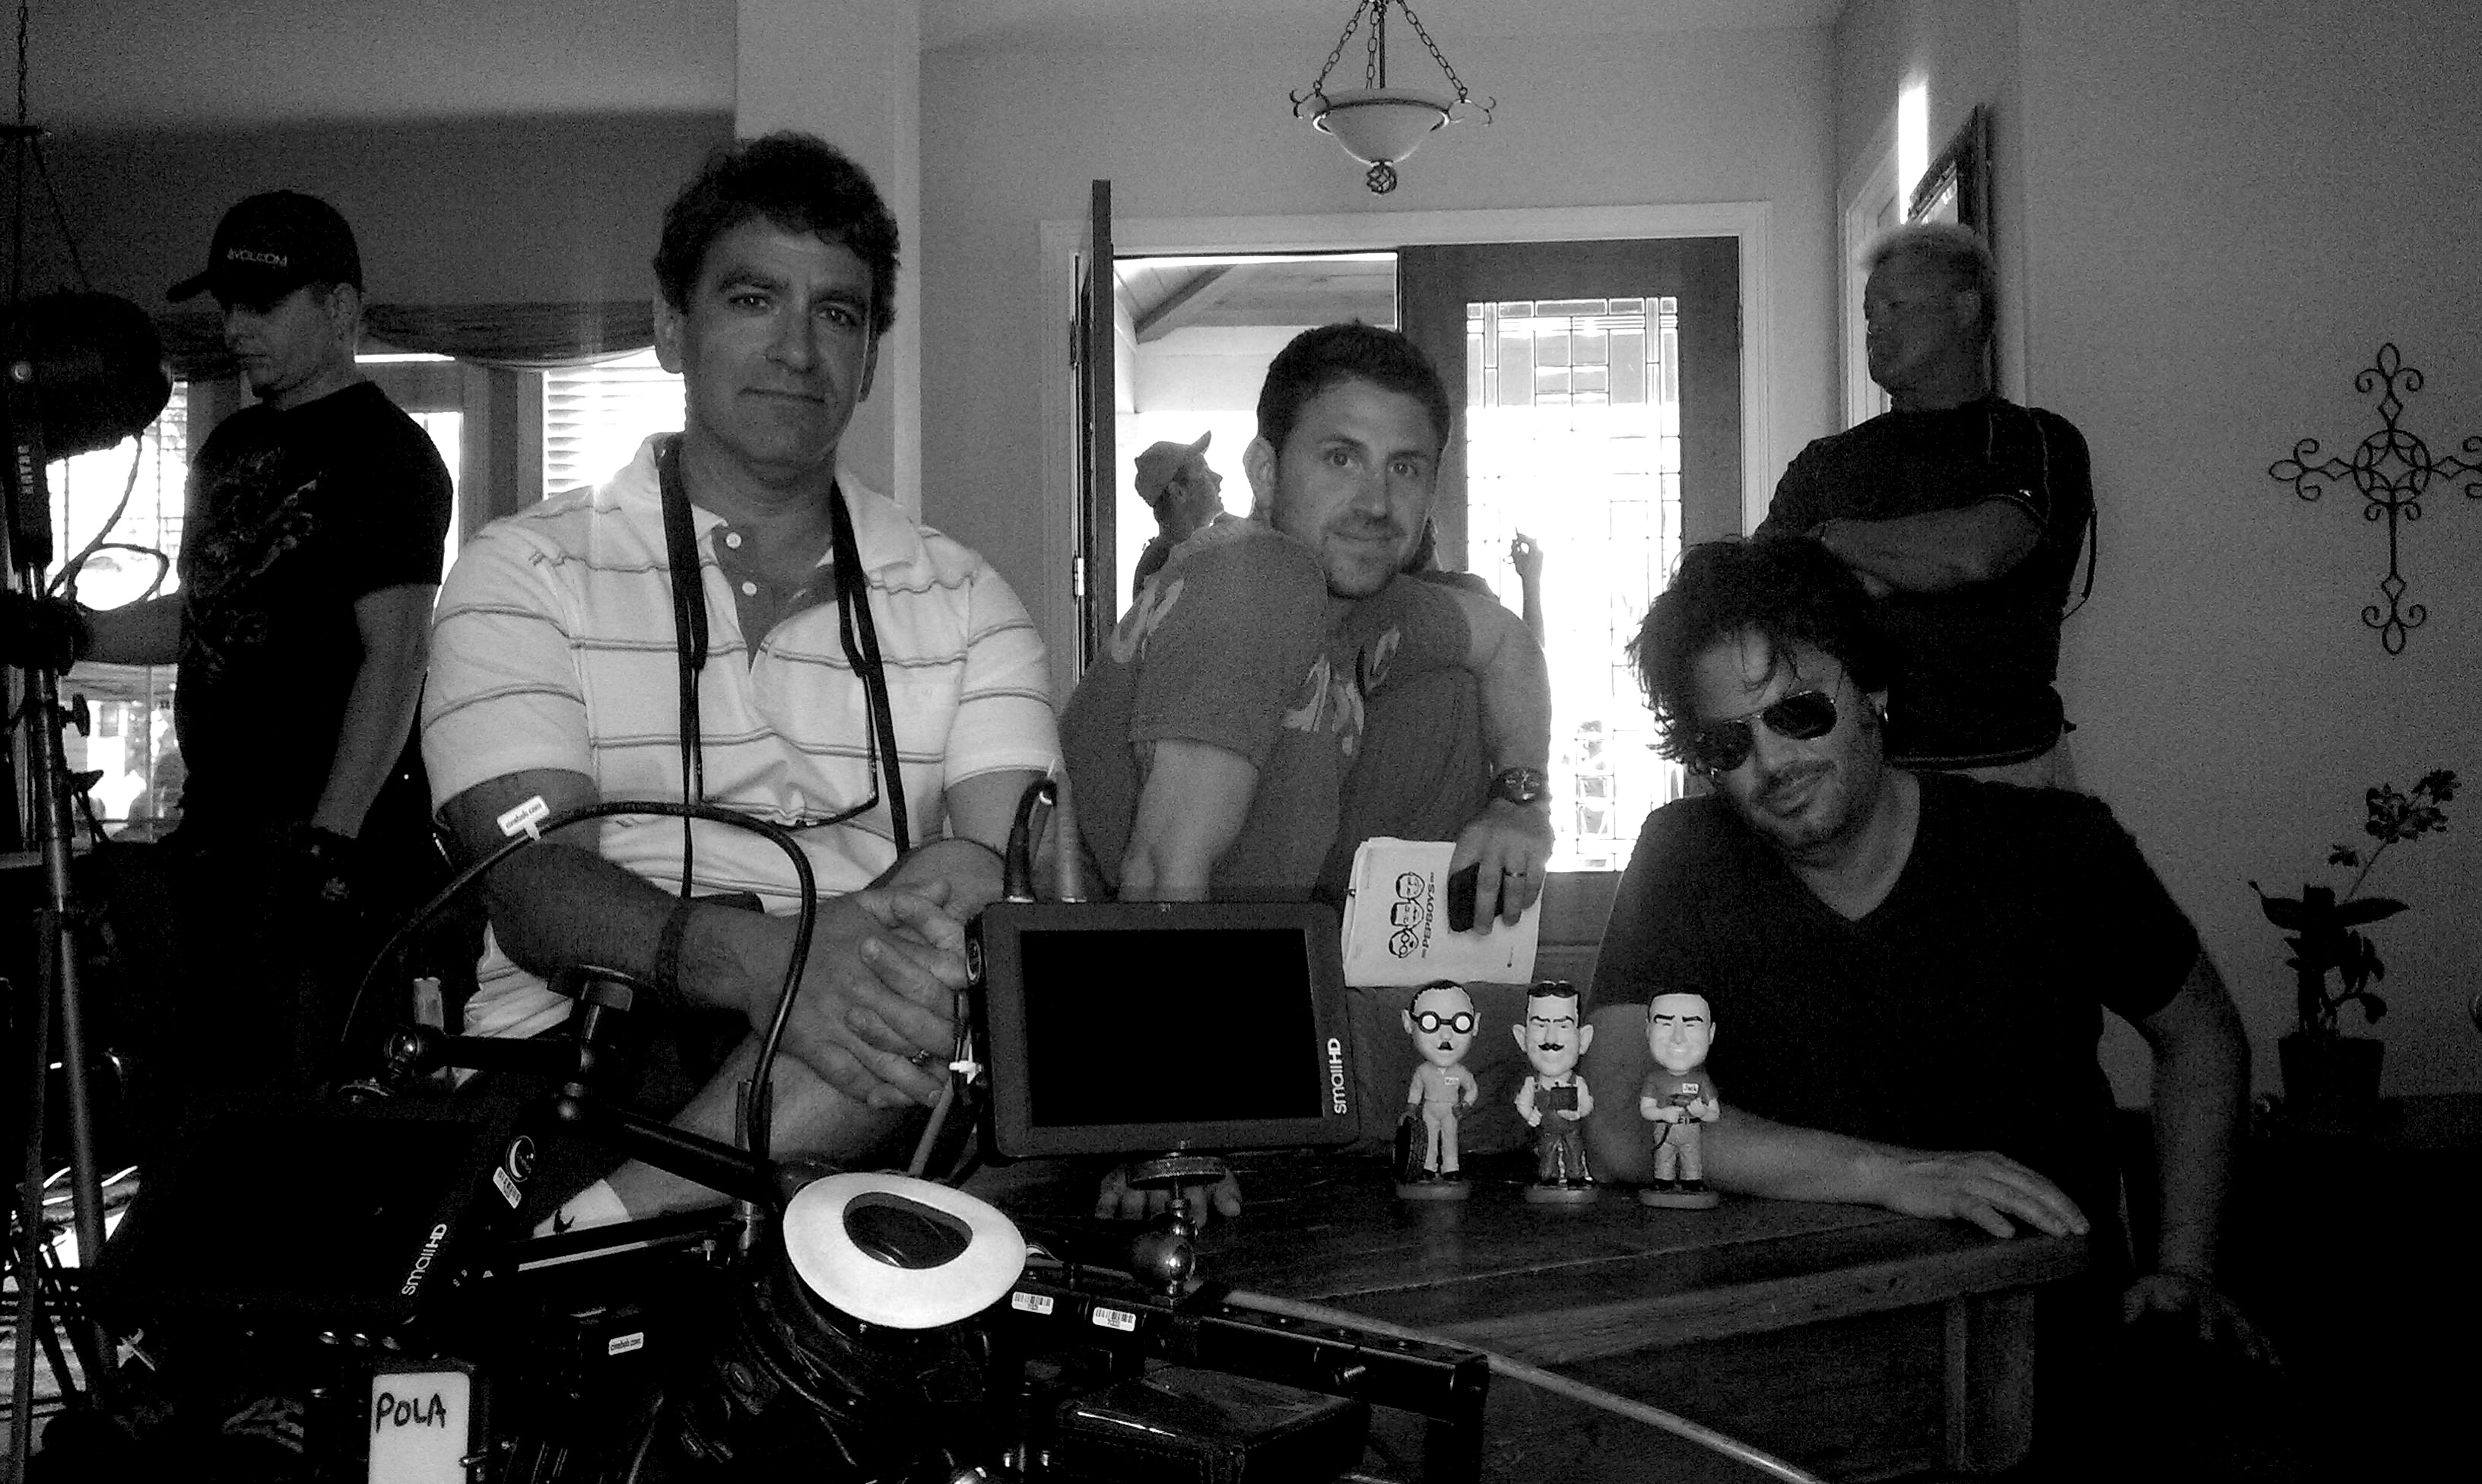 ON THE SET FILMING PEP BOY'S WITH EXECUTIVE PRODUCER KEN FRANCHI & DIRECTOR JOHN BONITO FILMED WITH THE ARRI ALEXA ORLANDO FLORIDA ..